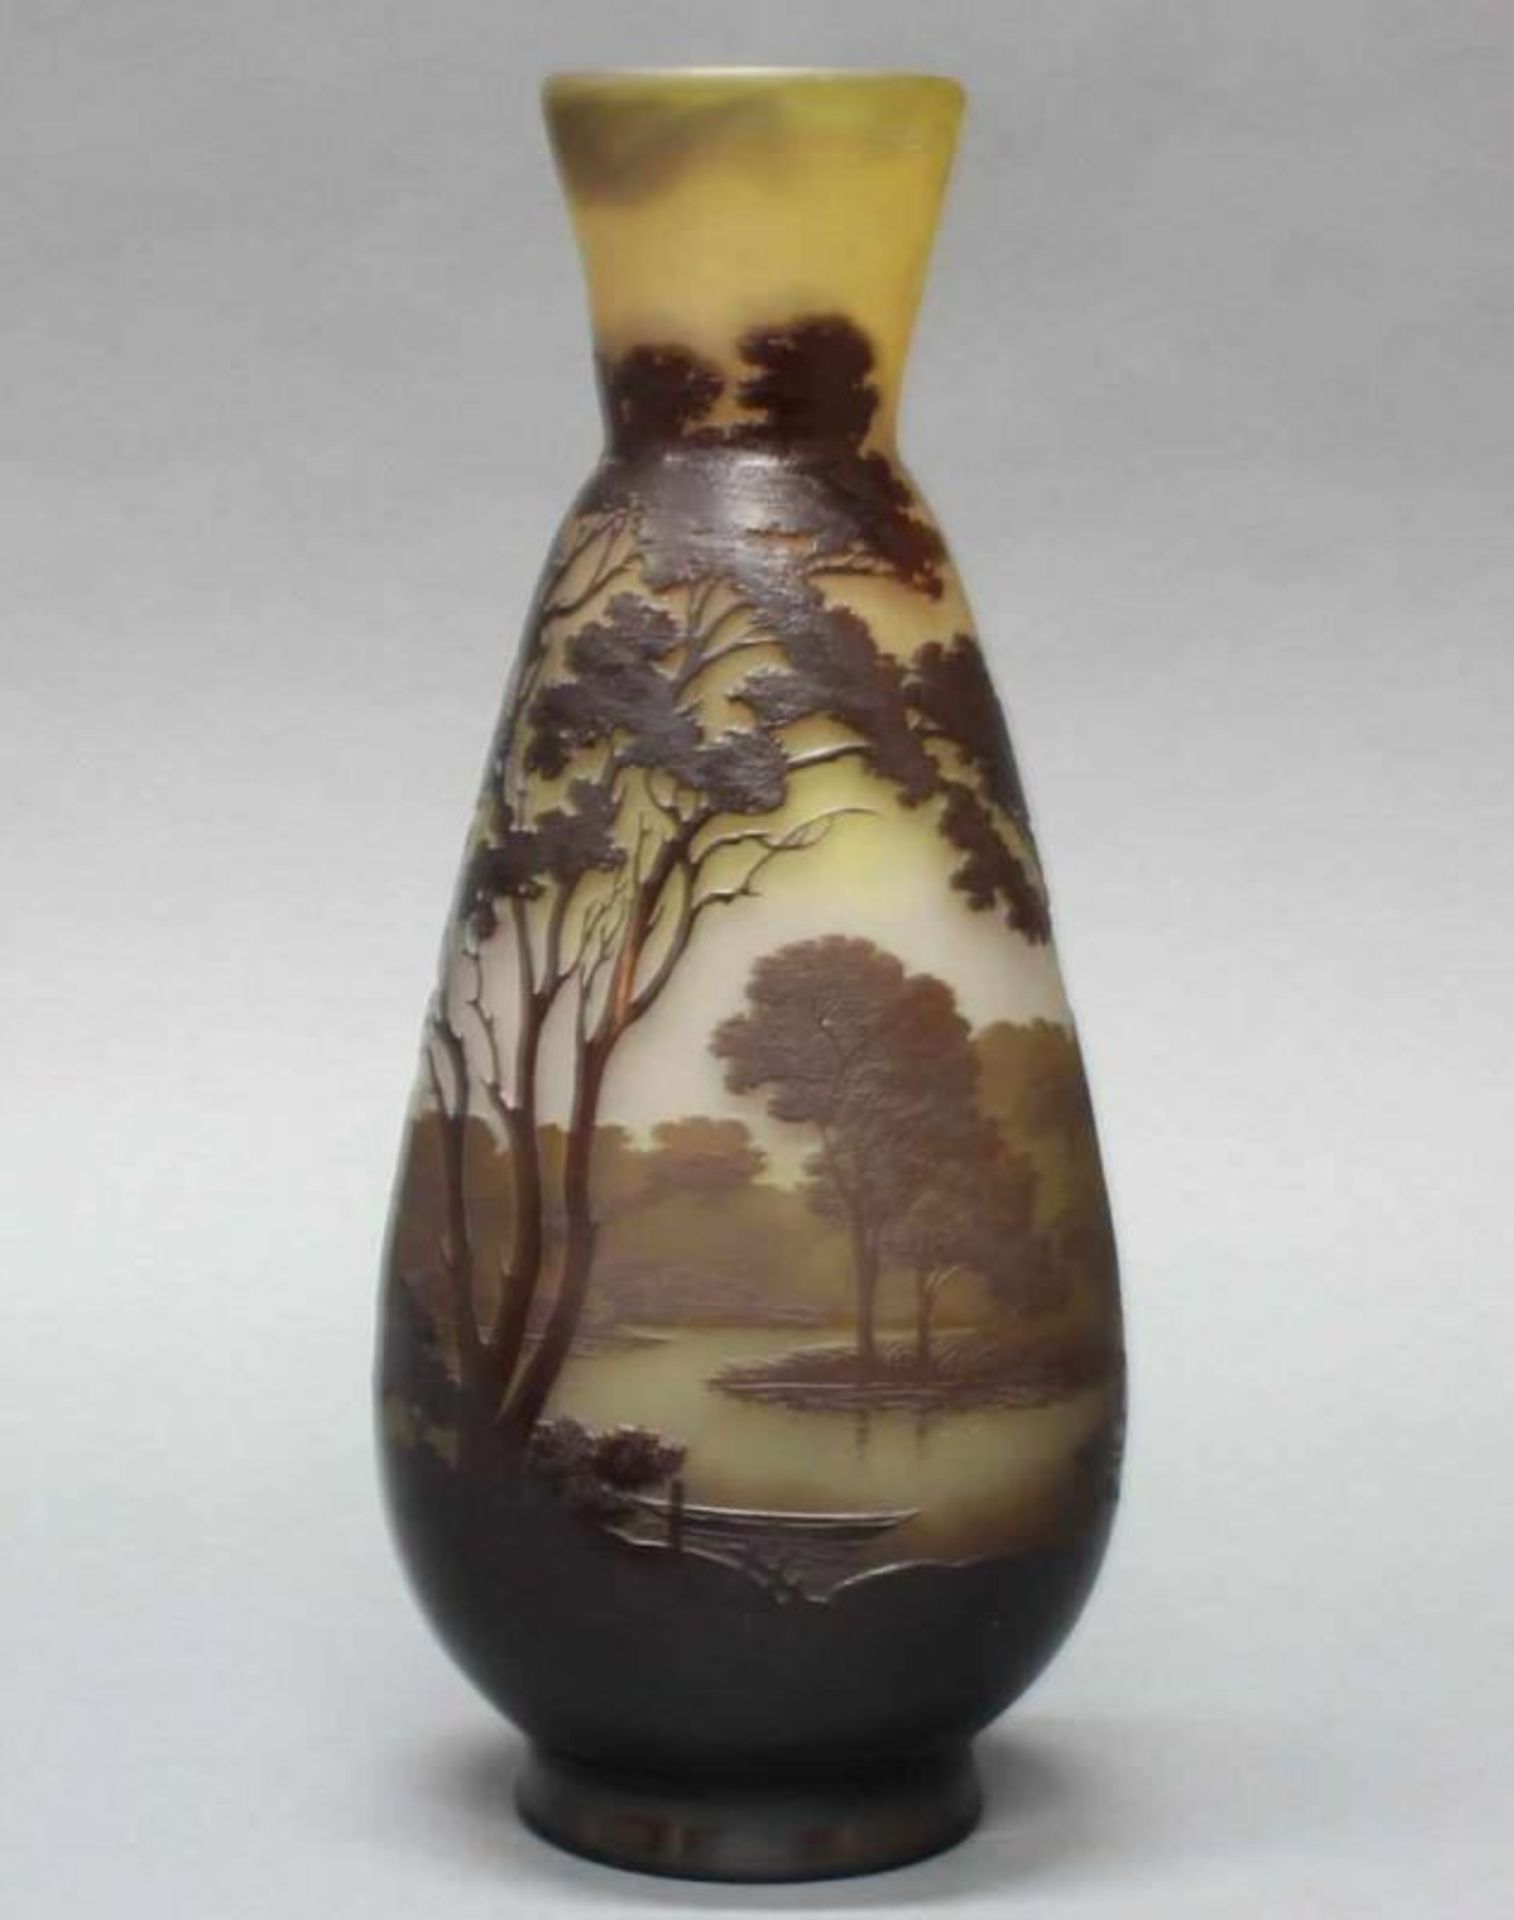 Vase, "Paysage lacustre", Emile Gallé, um 1910, Glas, brauner Überfangdekor auf mehrfarbigem